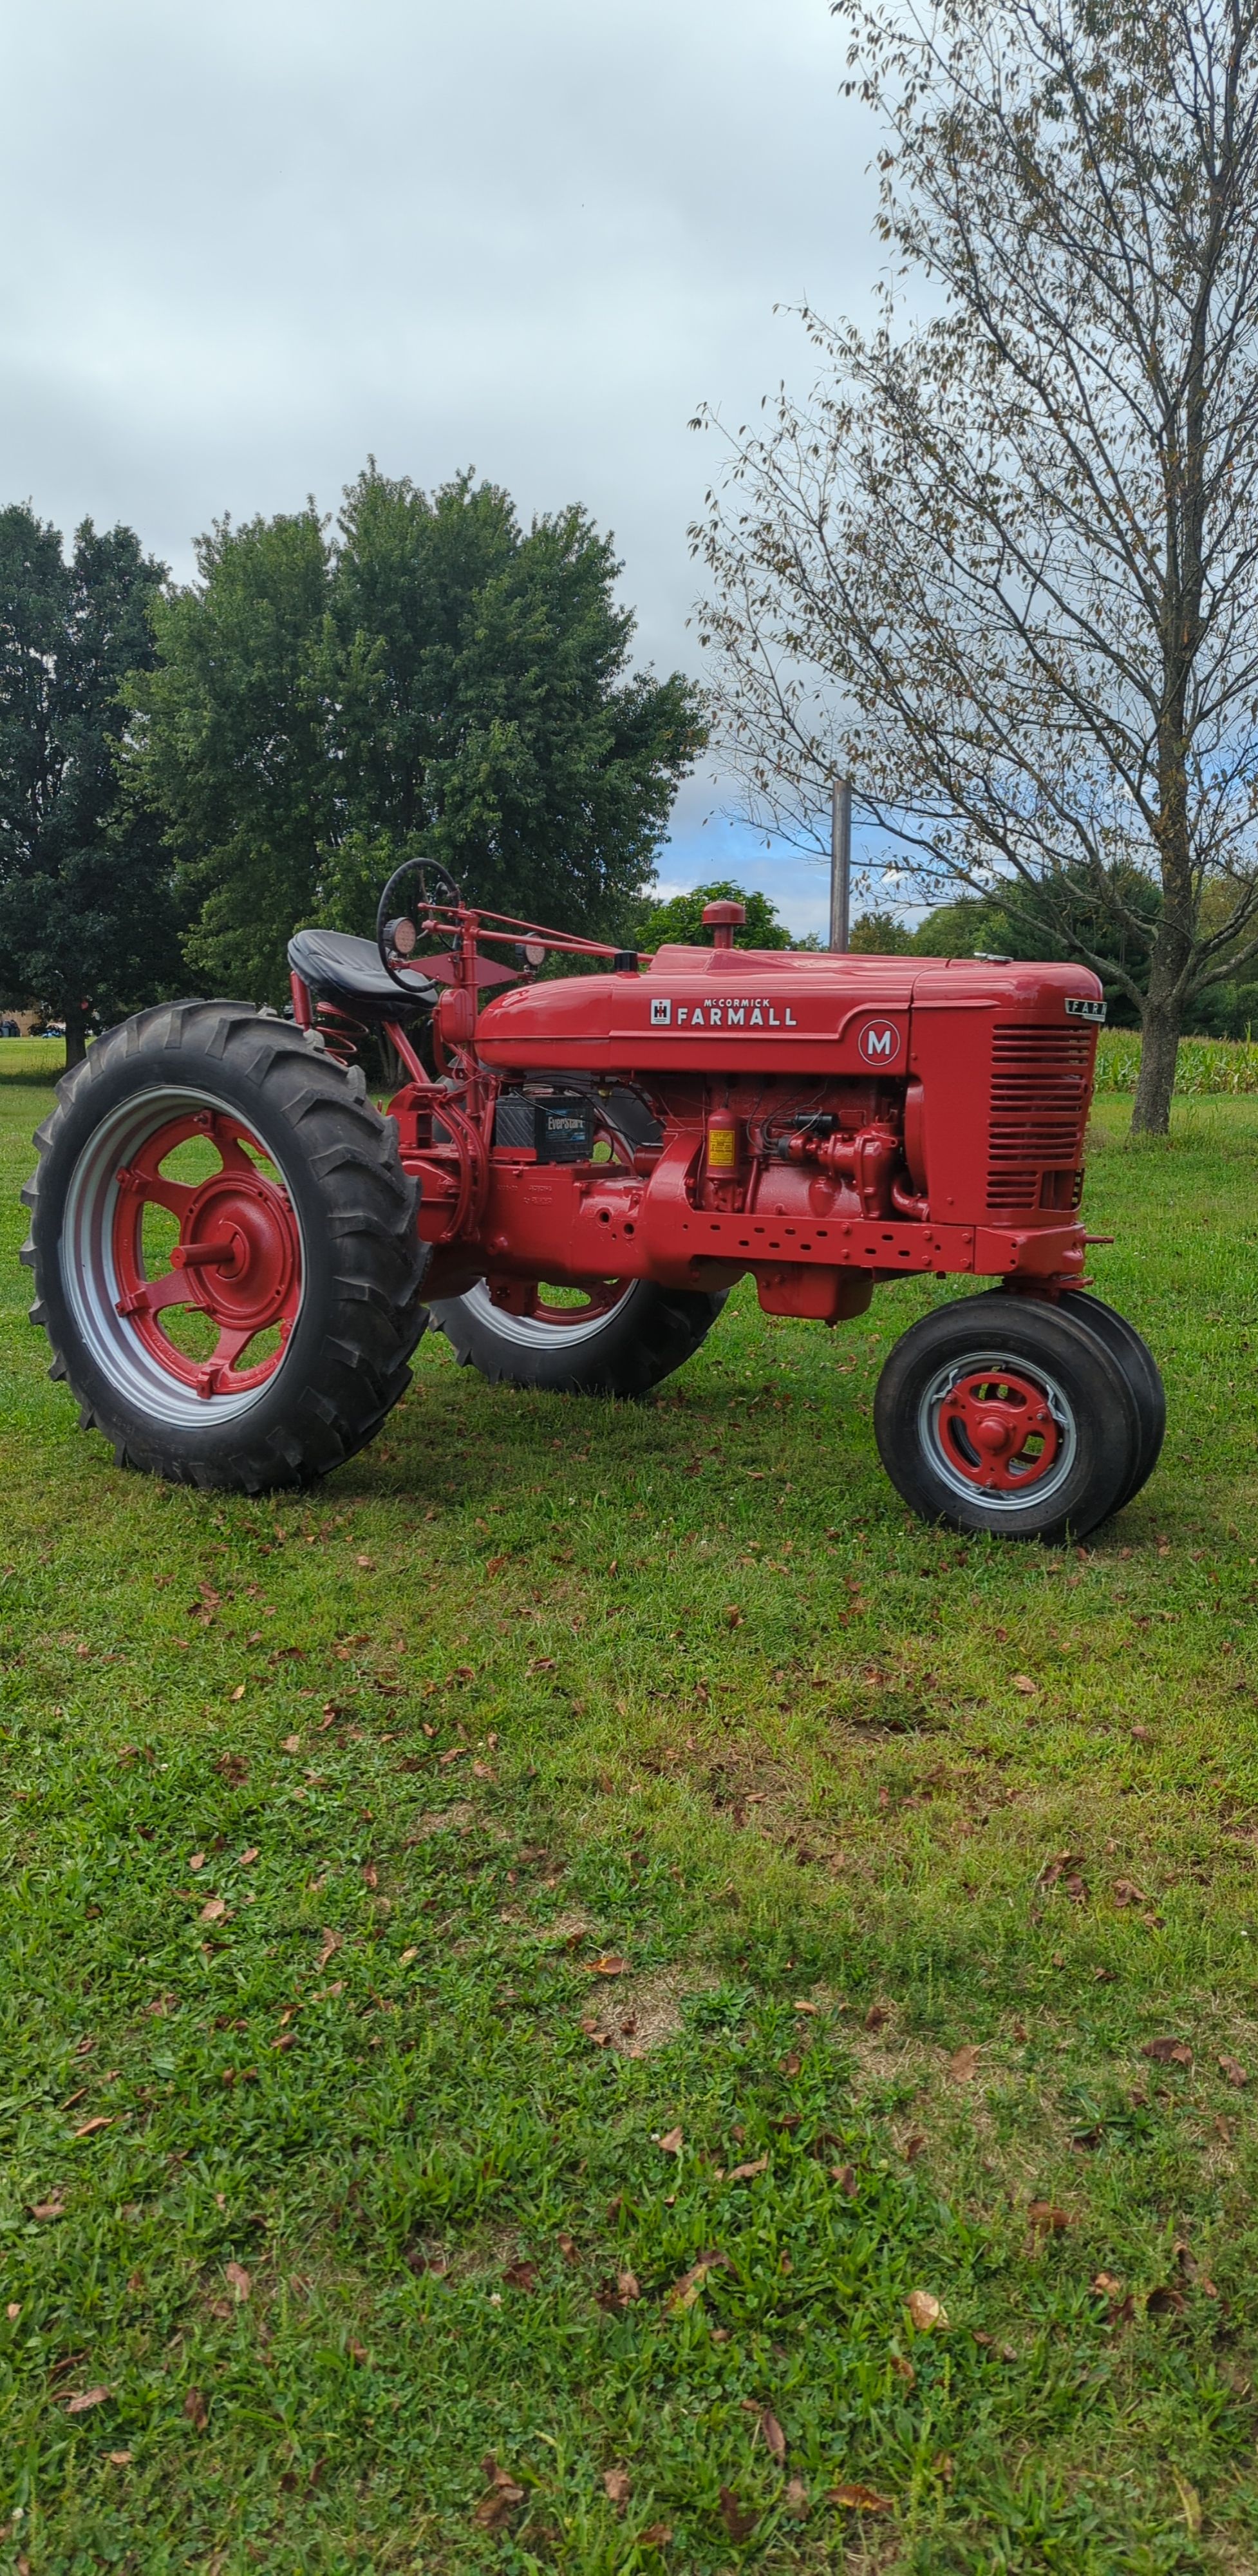 Big knob antique tractor and equipment show